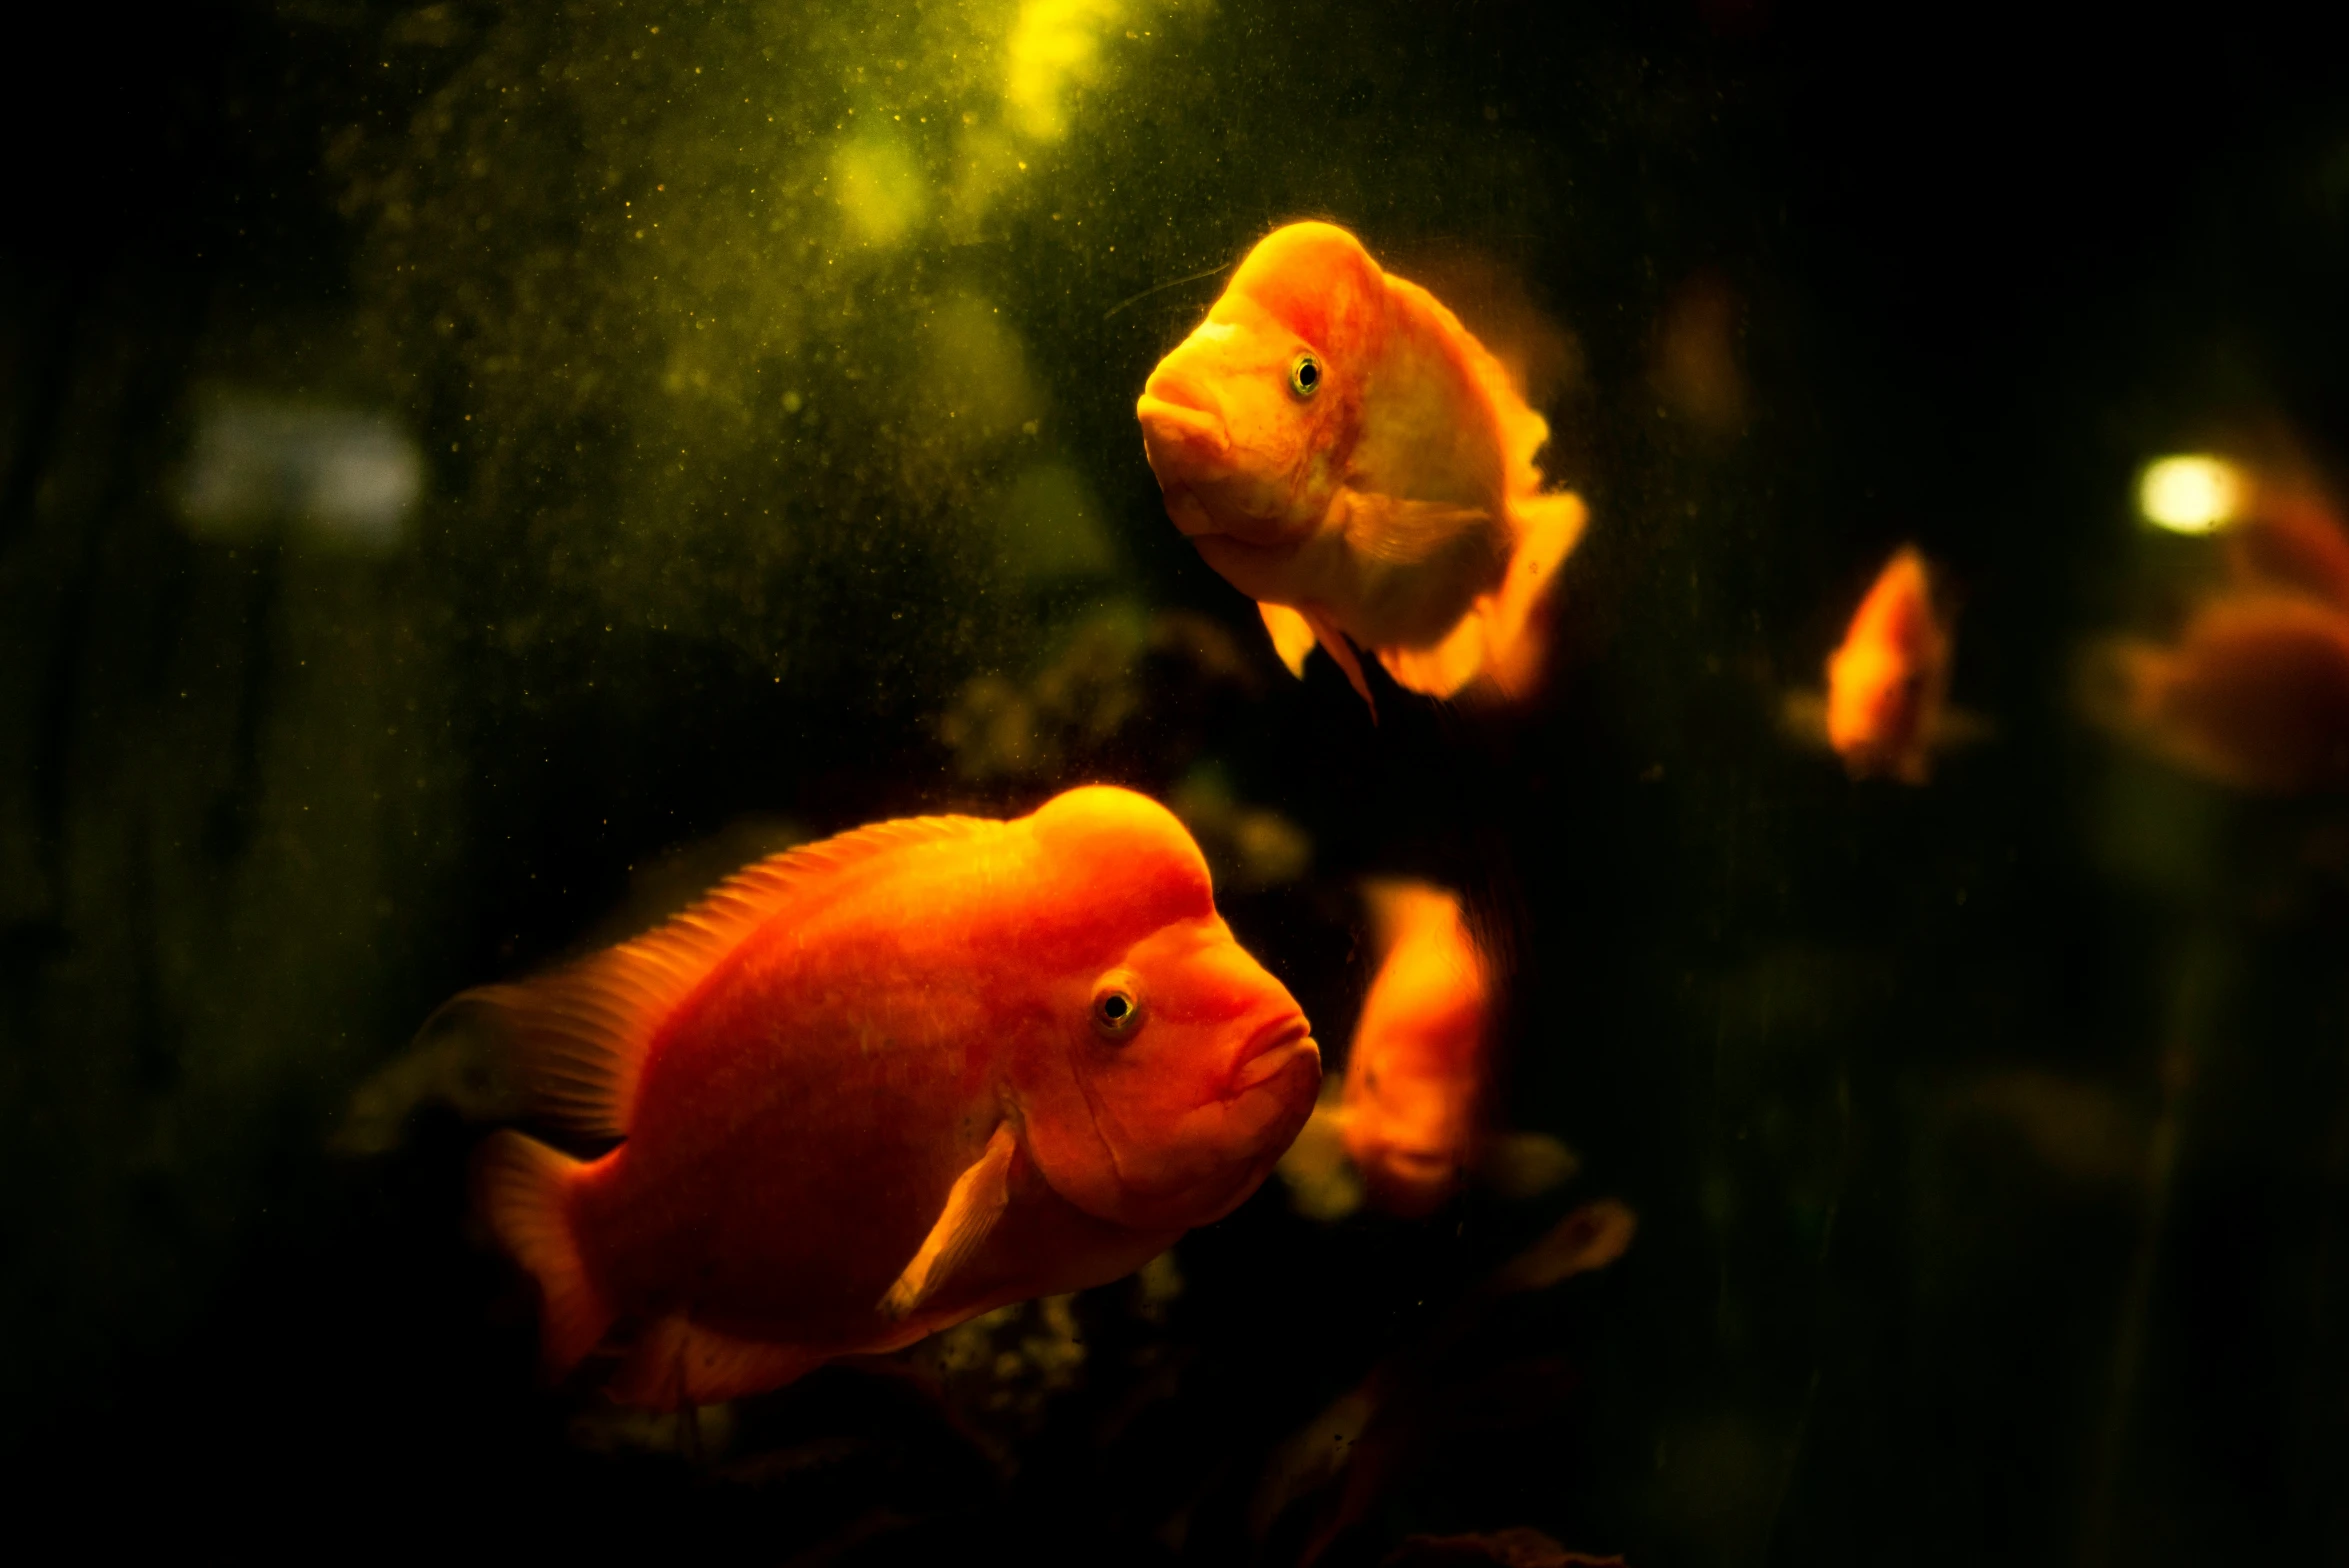 some very cute looking goldfishs in an aquarium